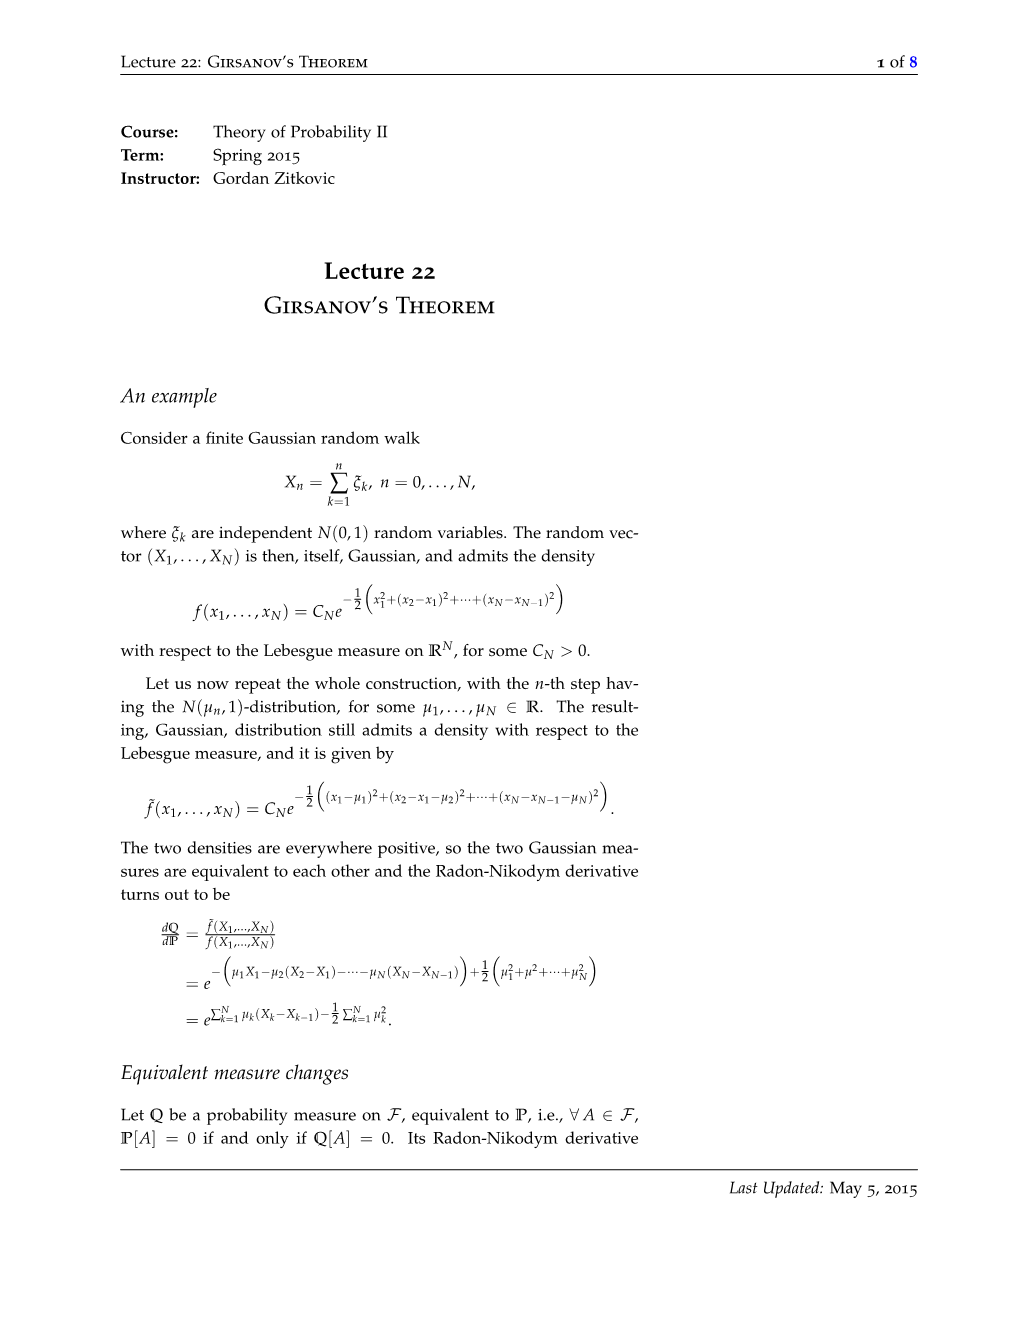 Lecture 22 Girsanov's Theorem